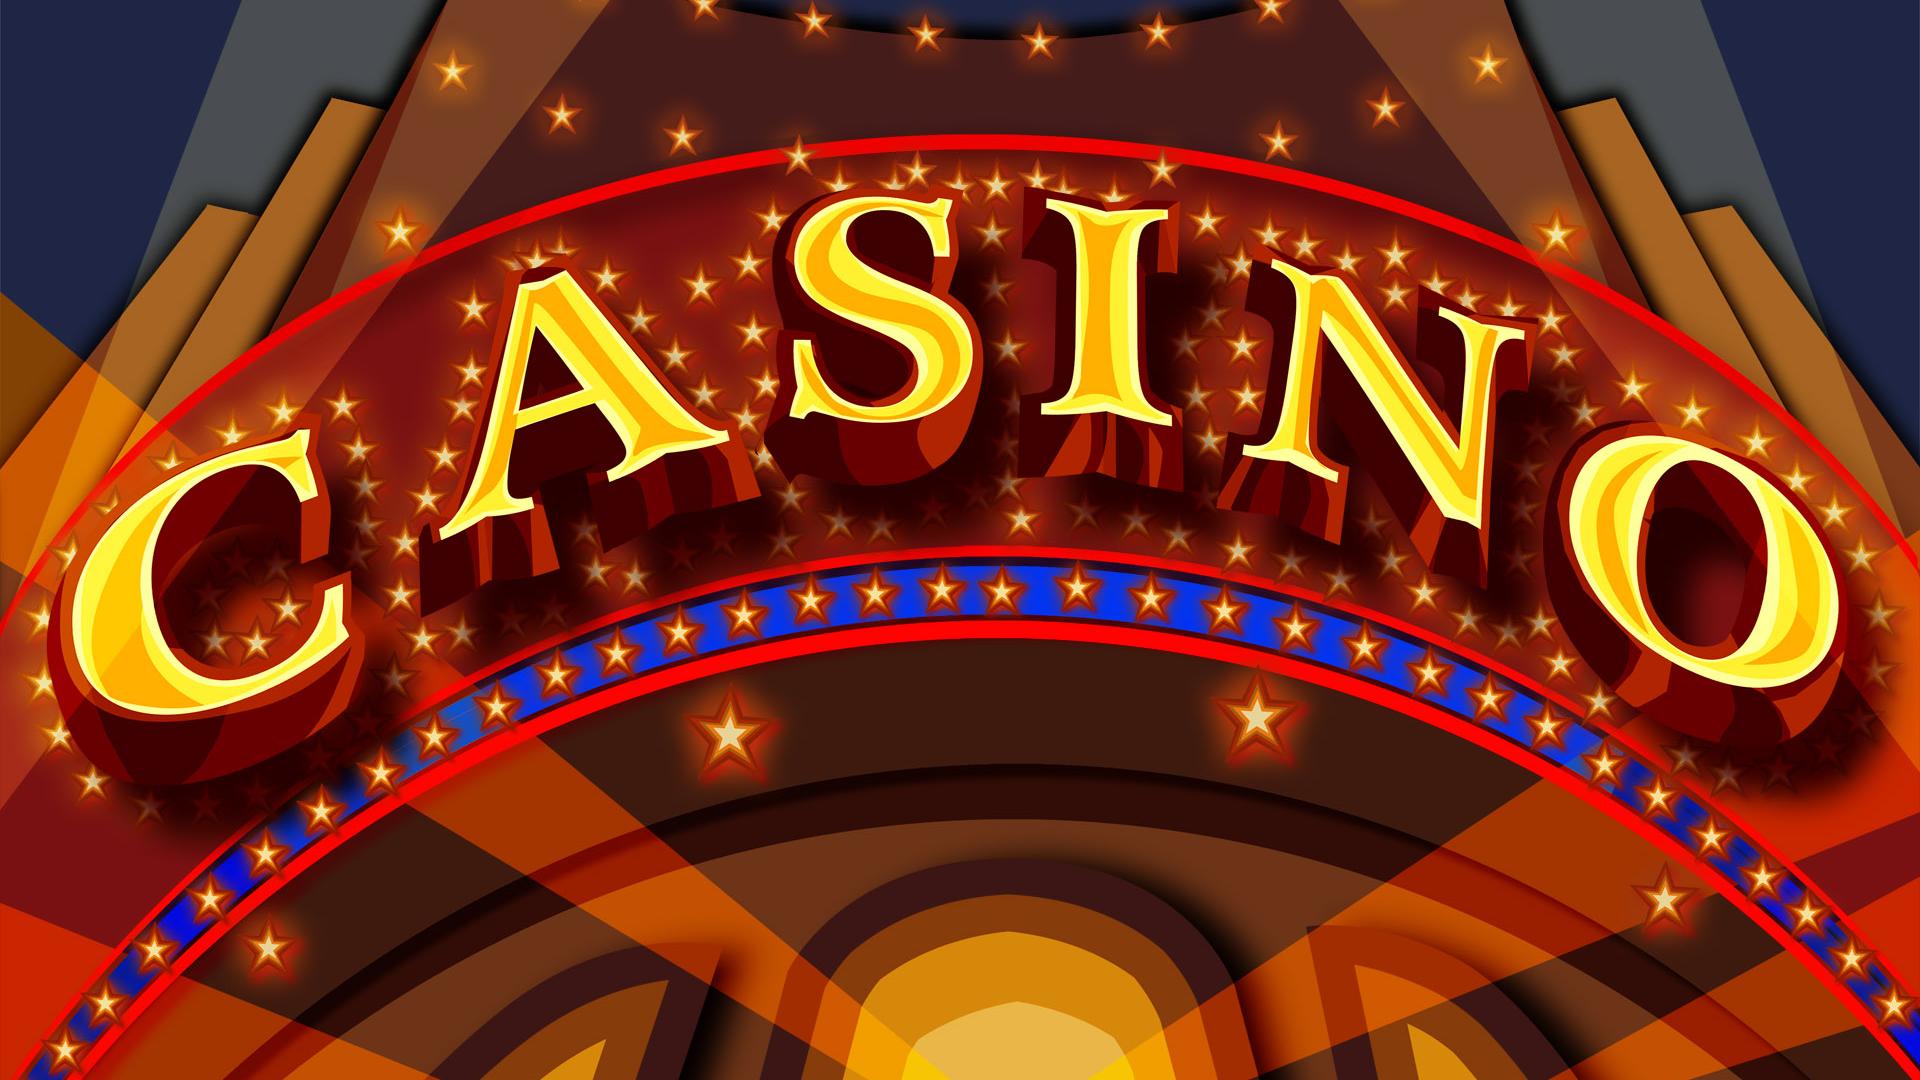 777 jackpot casino